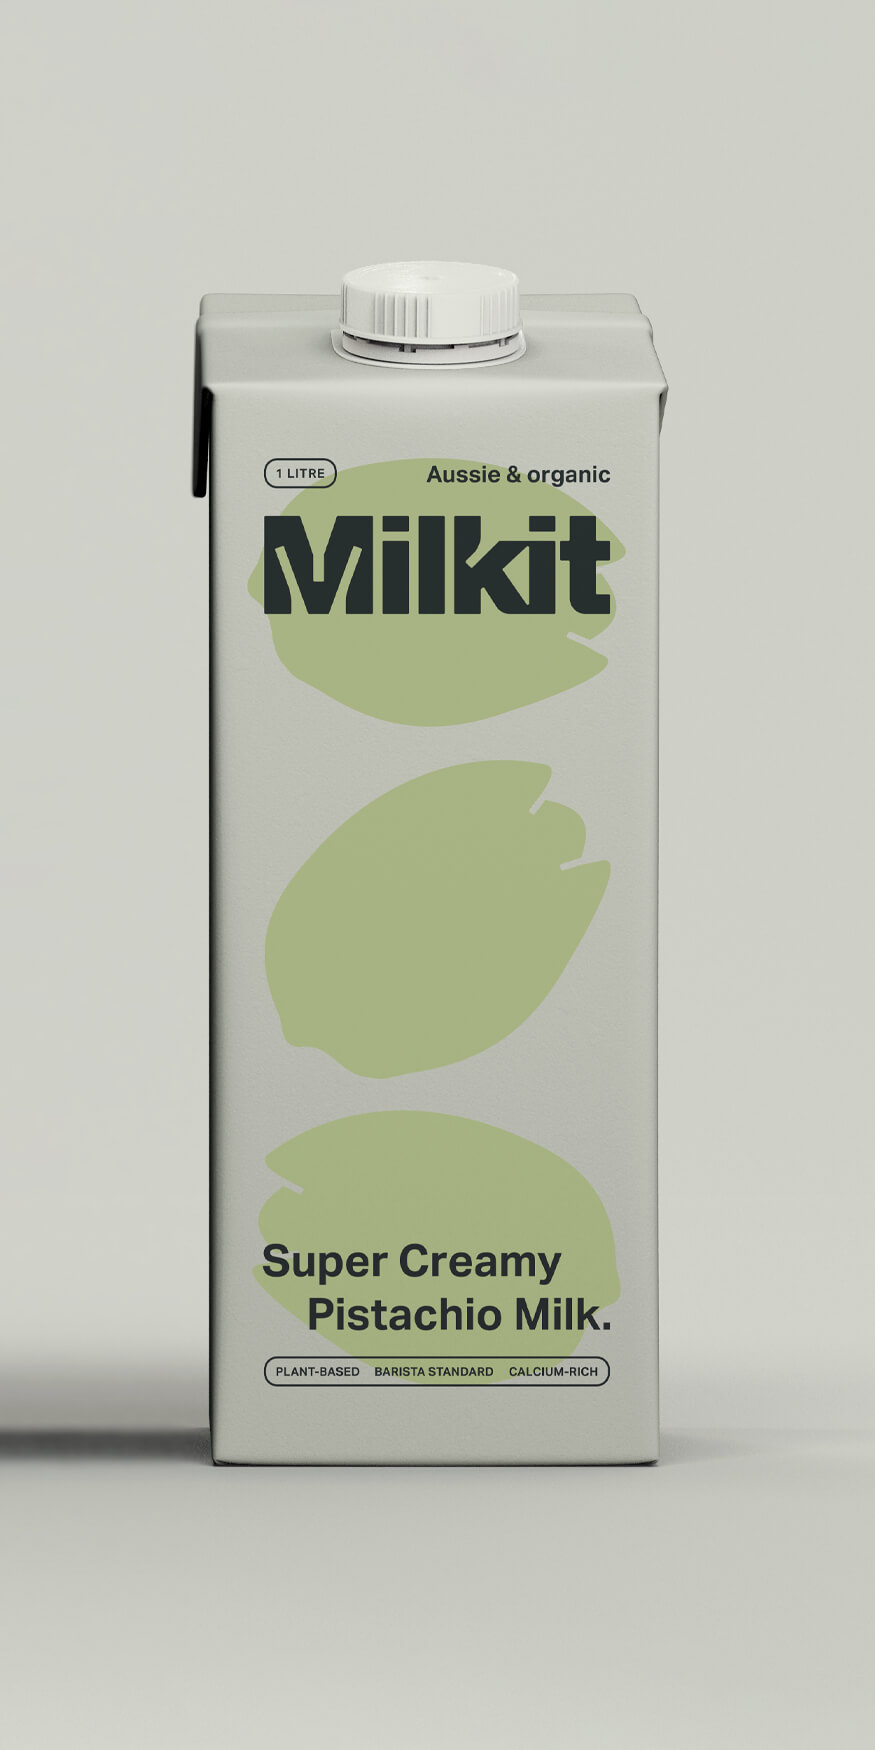 Packaging design for a carton of Milkit Pistachio Milk featuring minimal pistachio brand illustration.